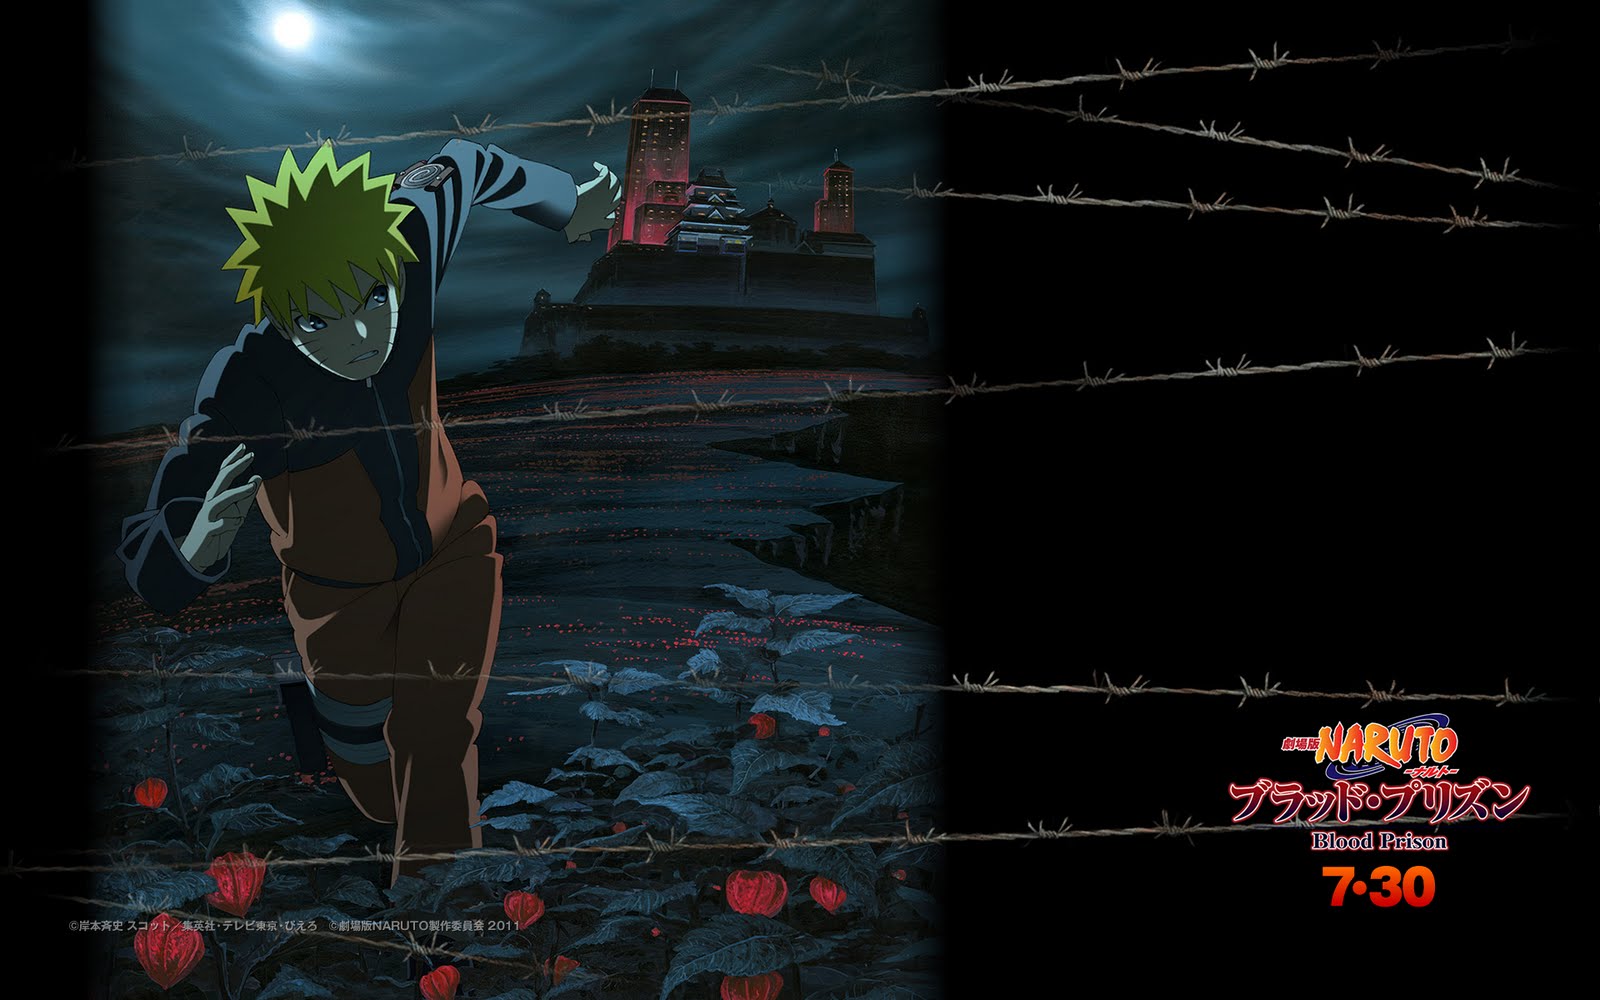 Naruto Shippuden Blood Prison Themes Infotaip